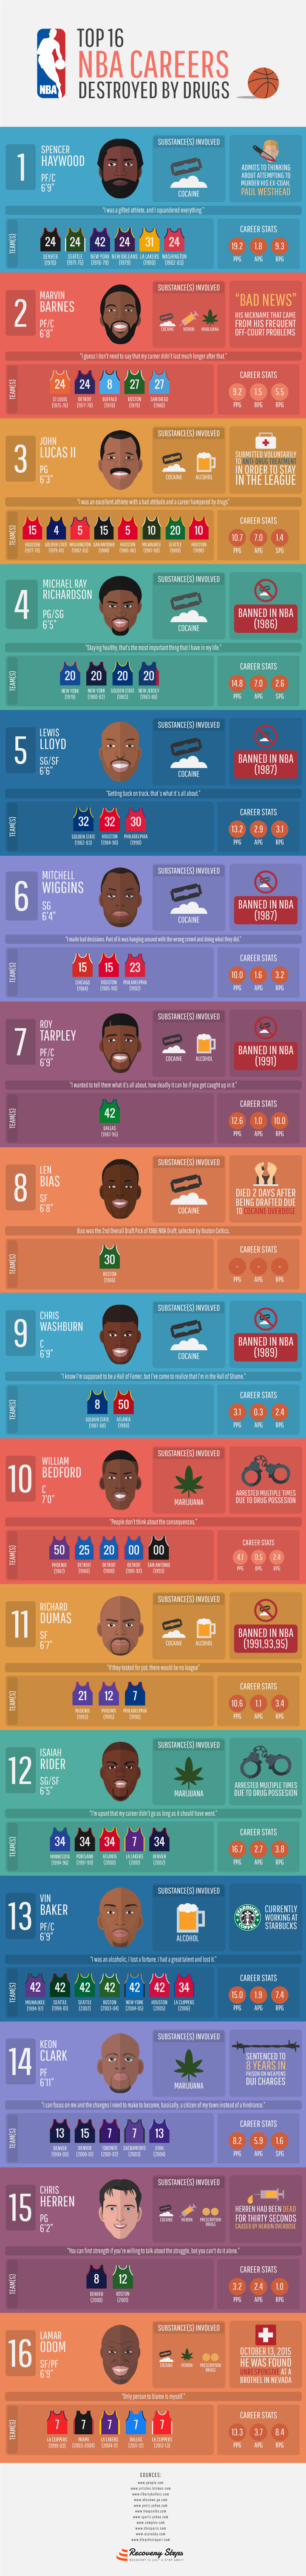 Top 16 NBA Careers Destroyed by Drugs